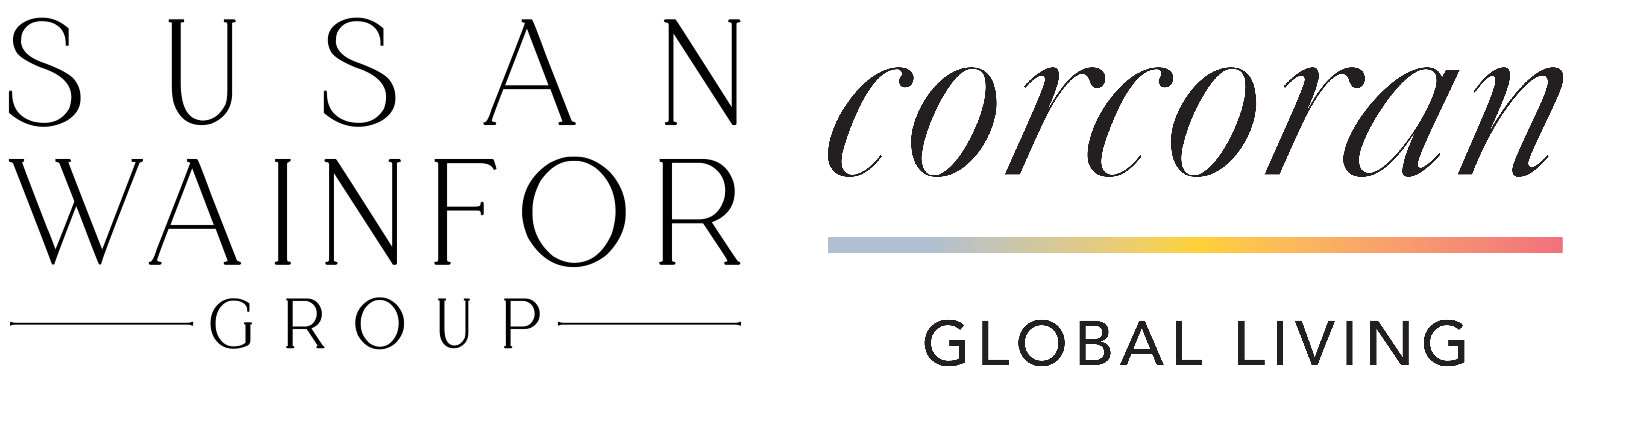 The Susan Wainfor Group | Corcoran Global Living